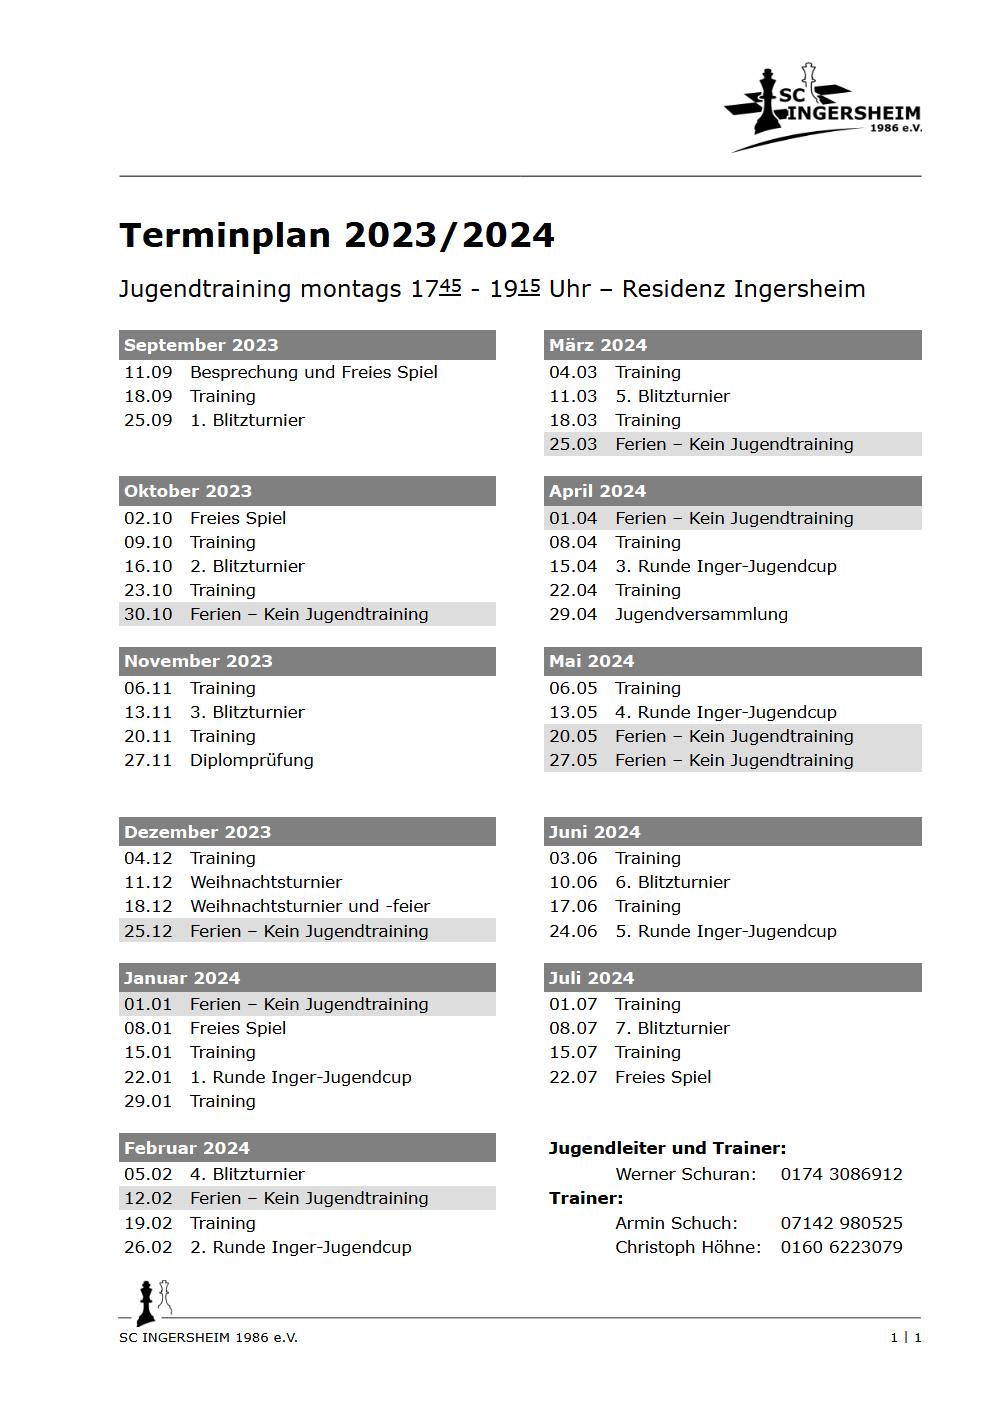 Terminplan Jugend 2023/24